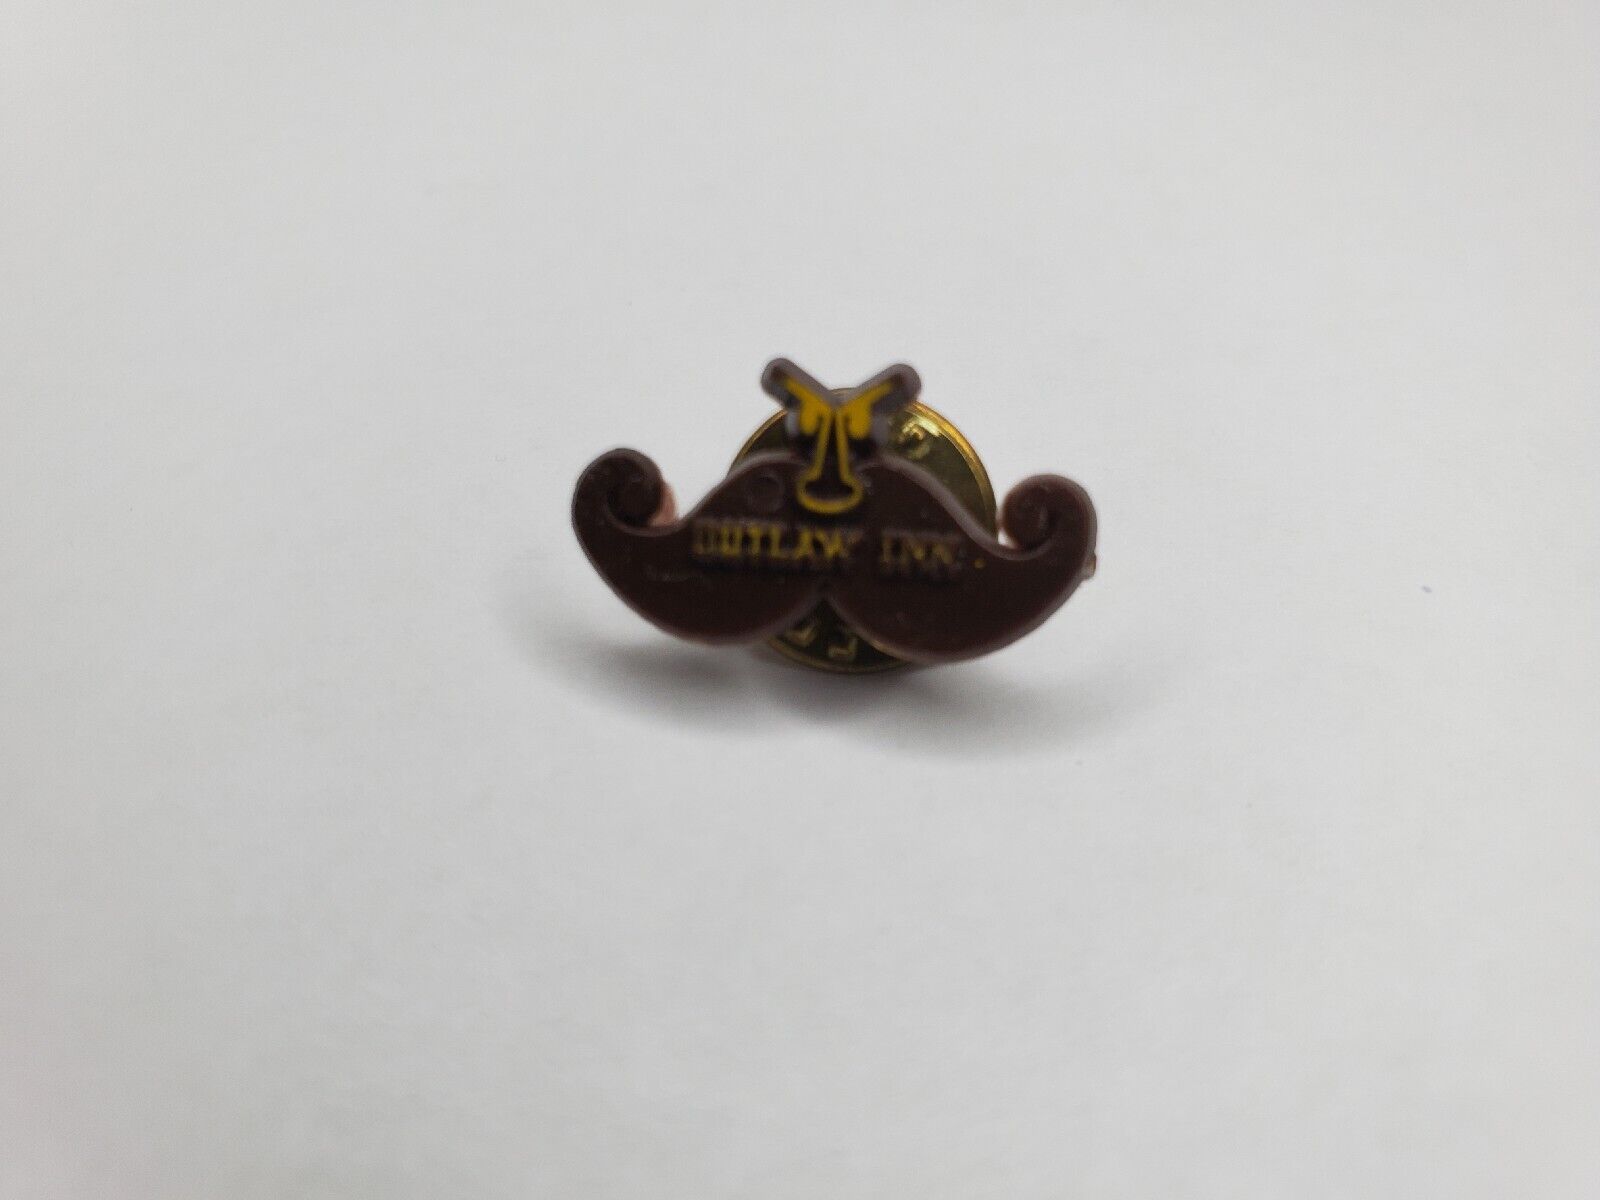 Vintage Outlaw Inn Moustache Design Pin USED